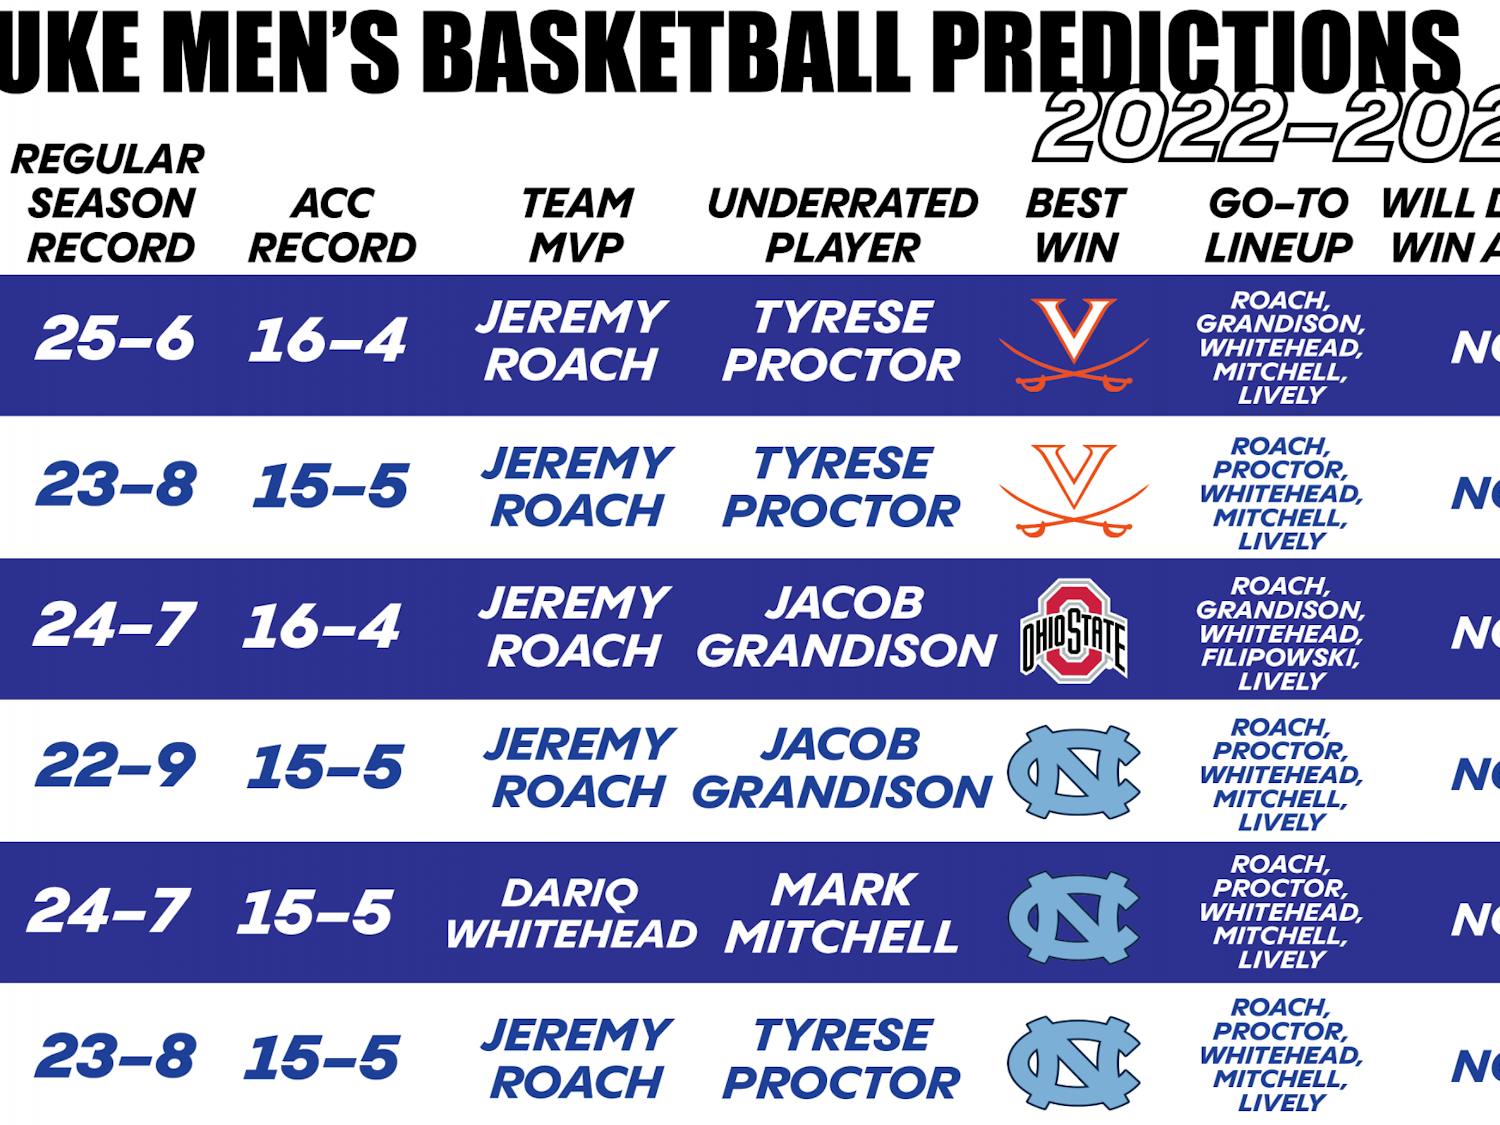 The Chronicle's beat writers predict Duke's season.